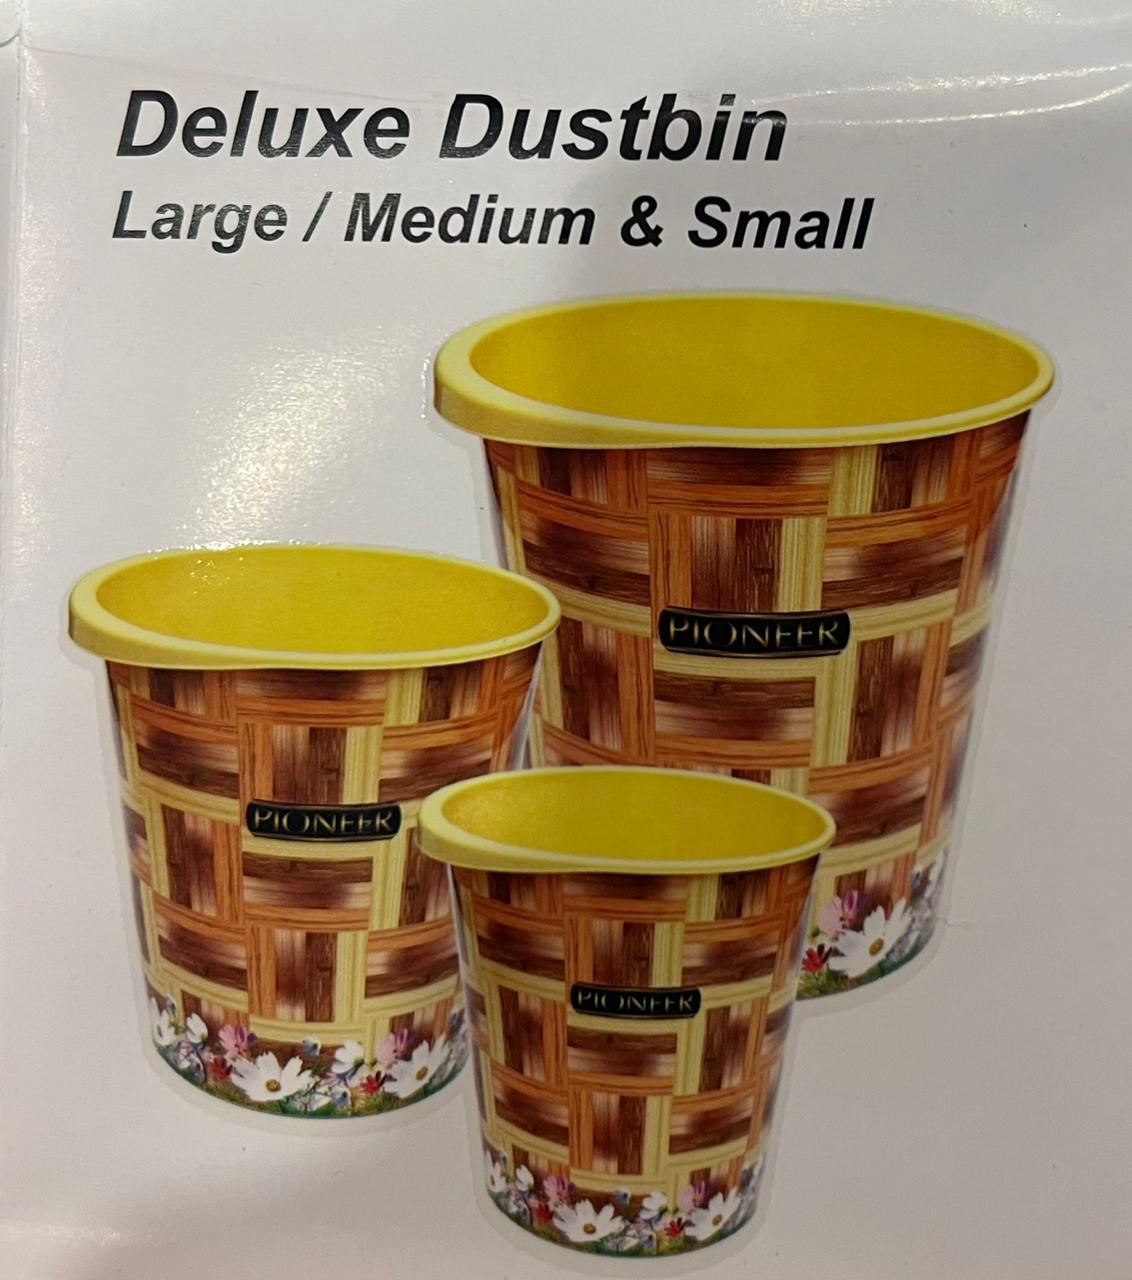 Deluxe dustbin